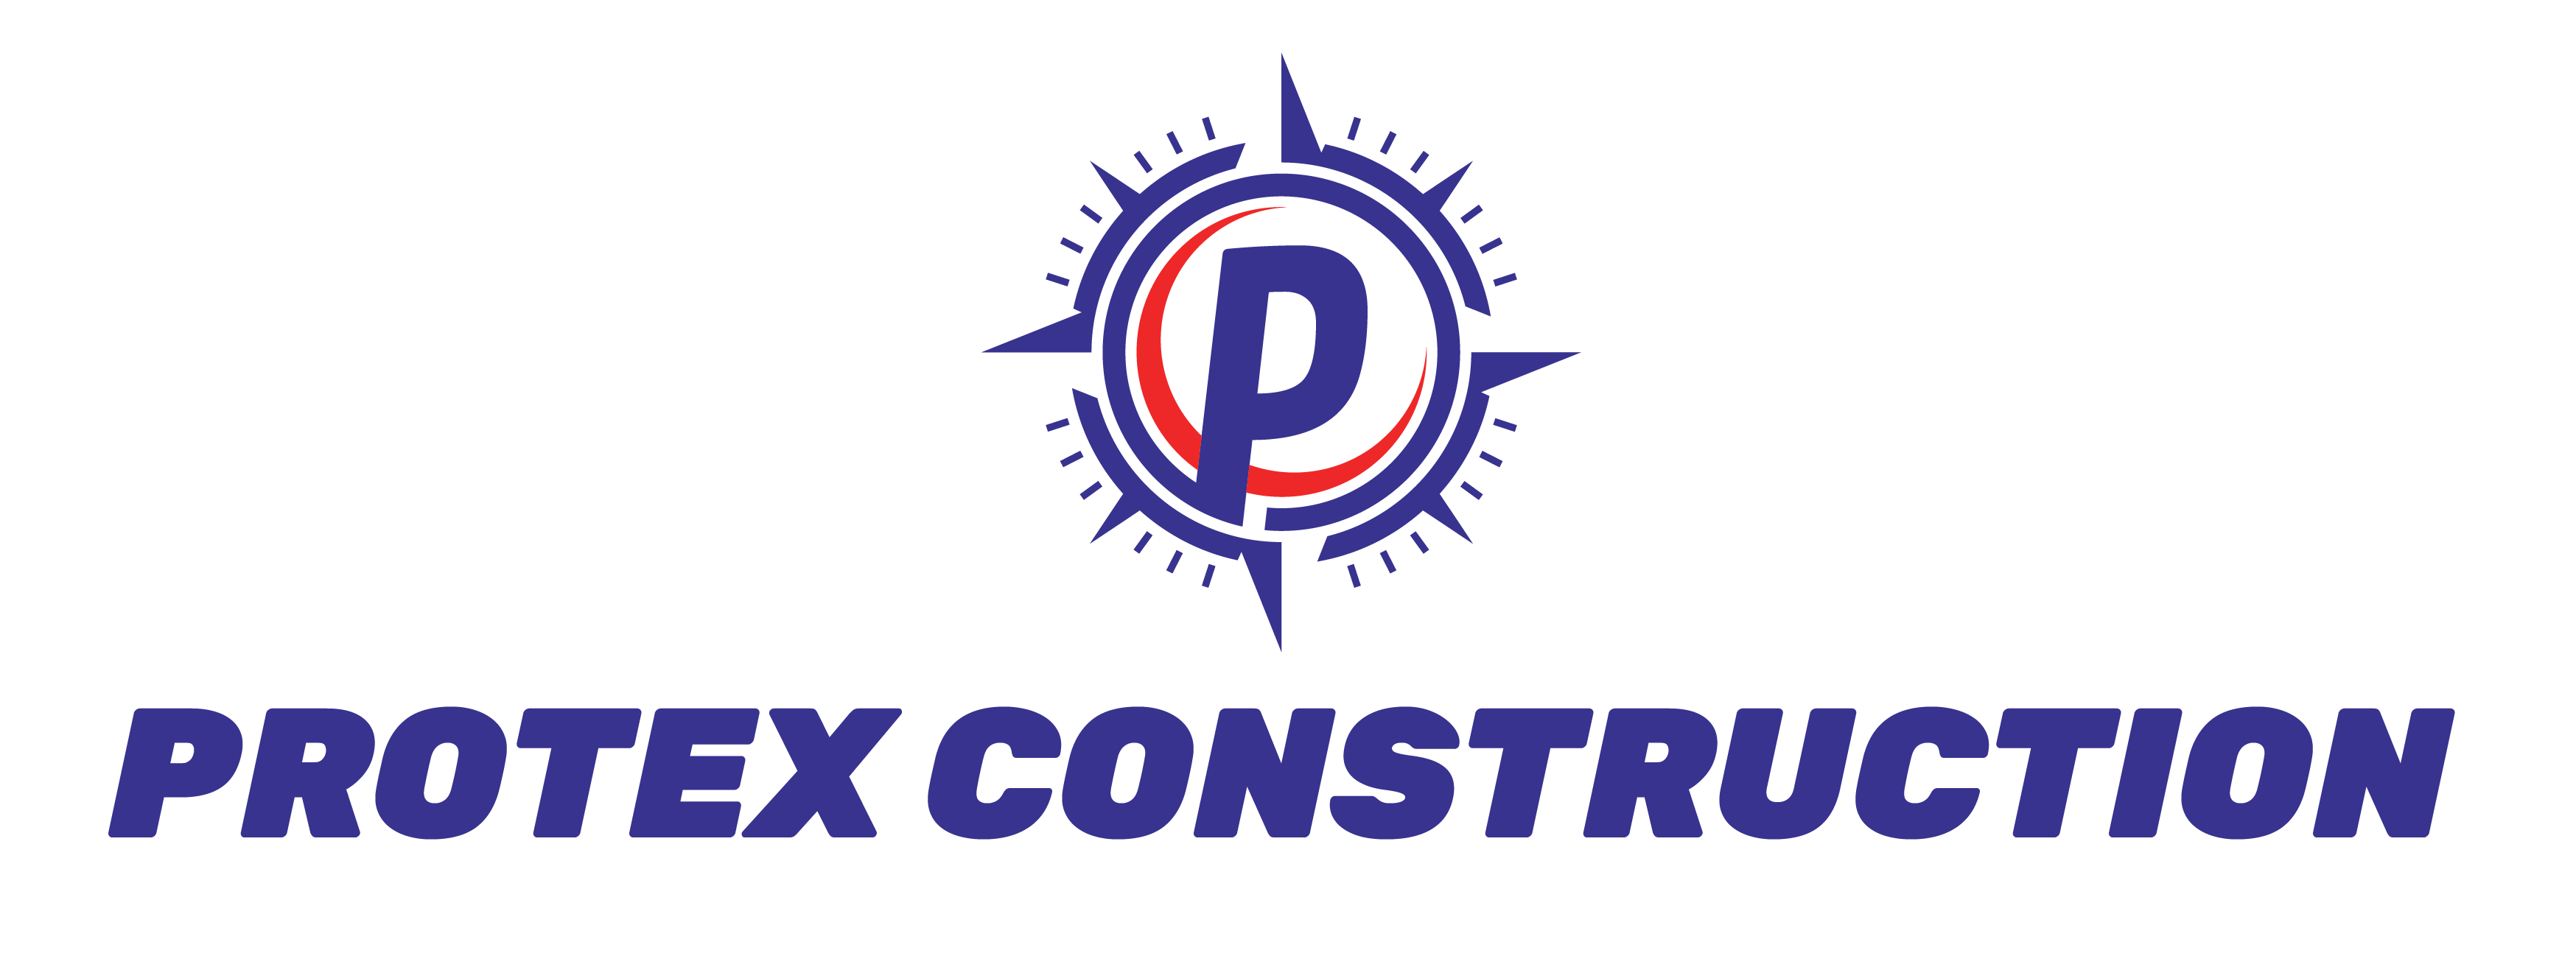 Protex Construction